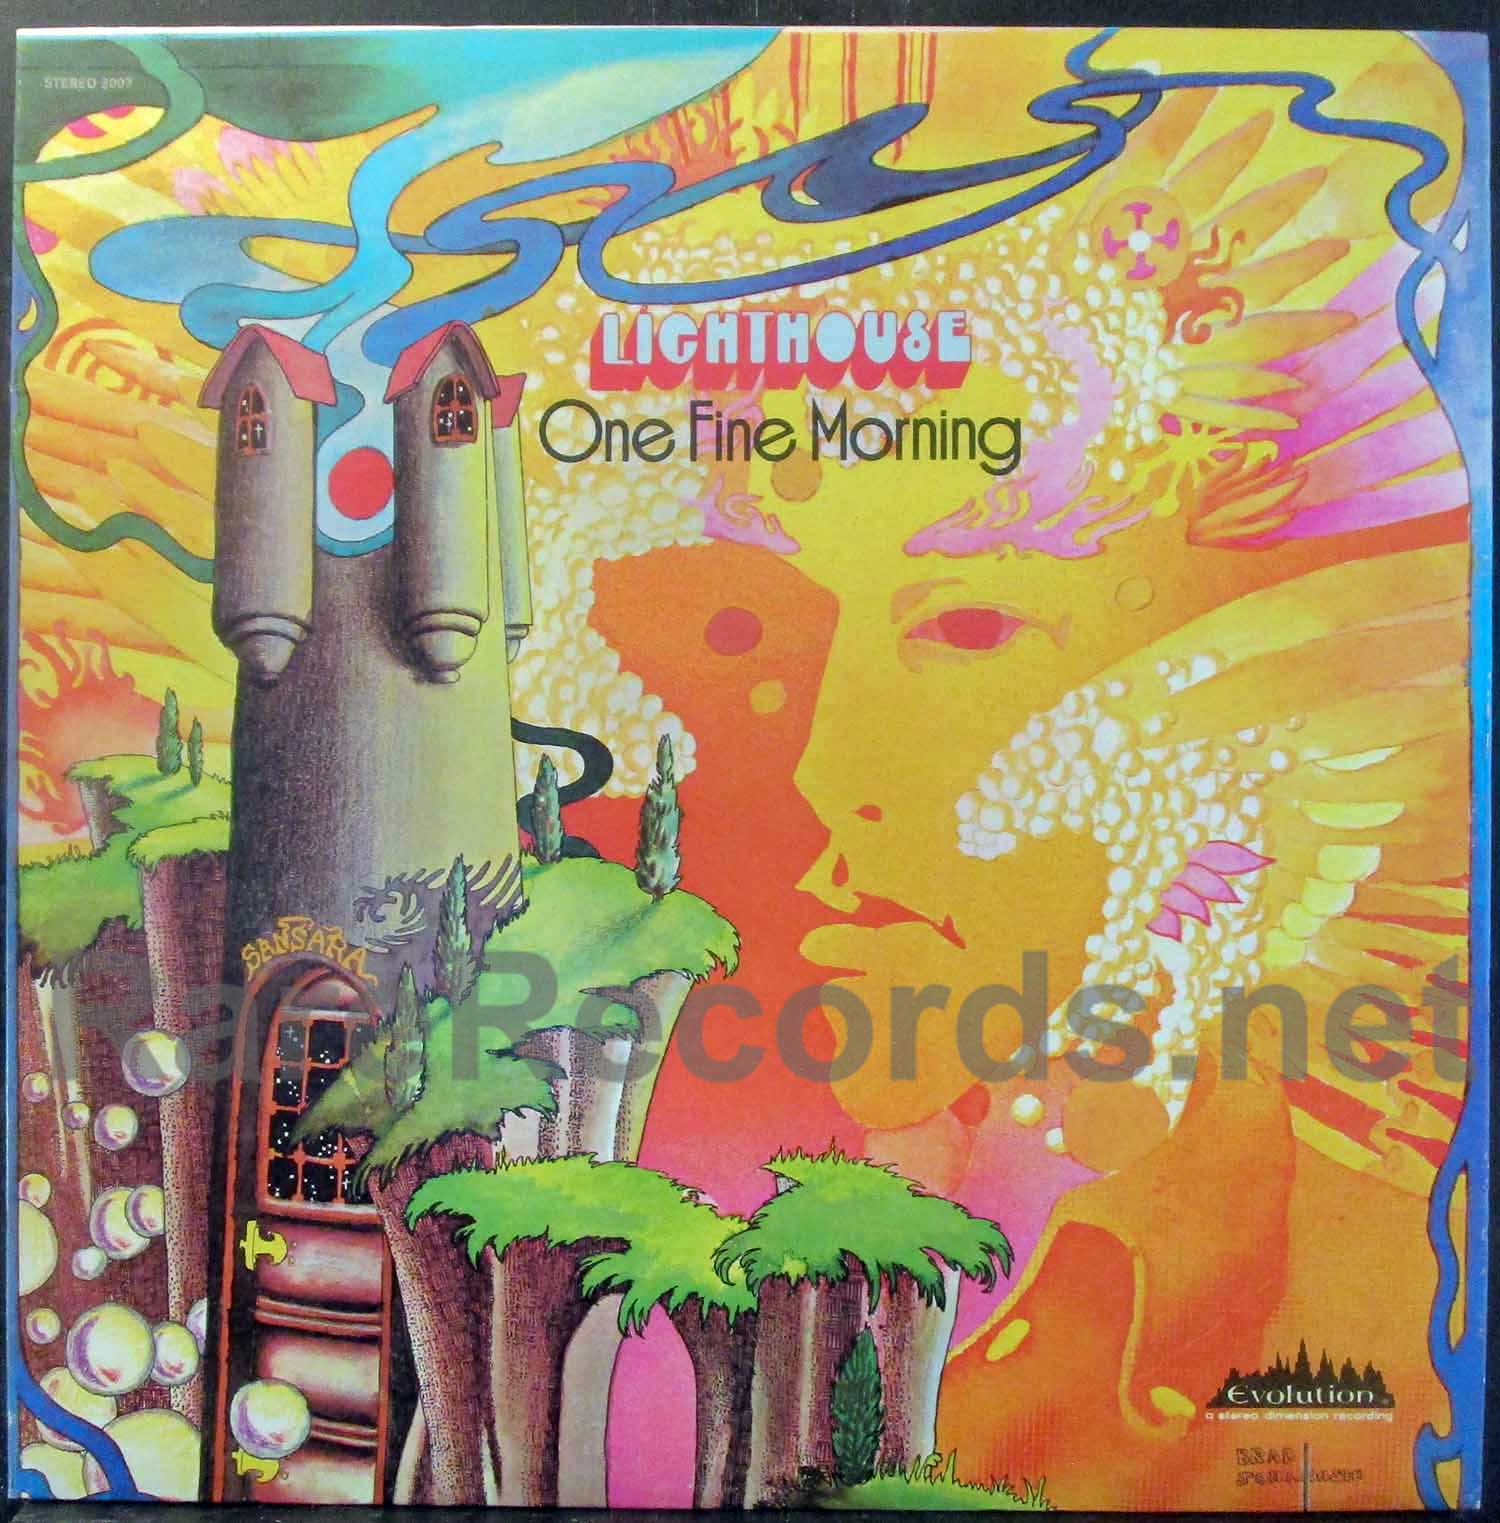 Lighthouse – One Fine Morning original U.S. LP